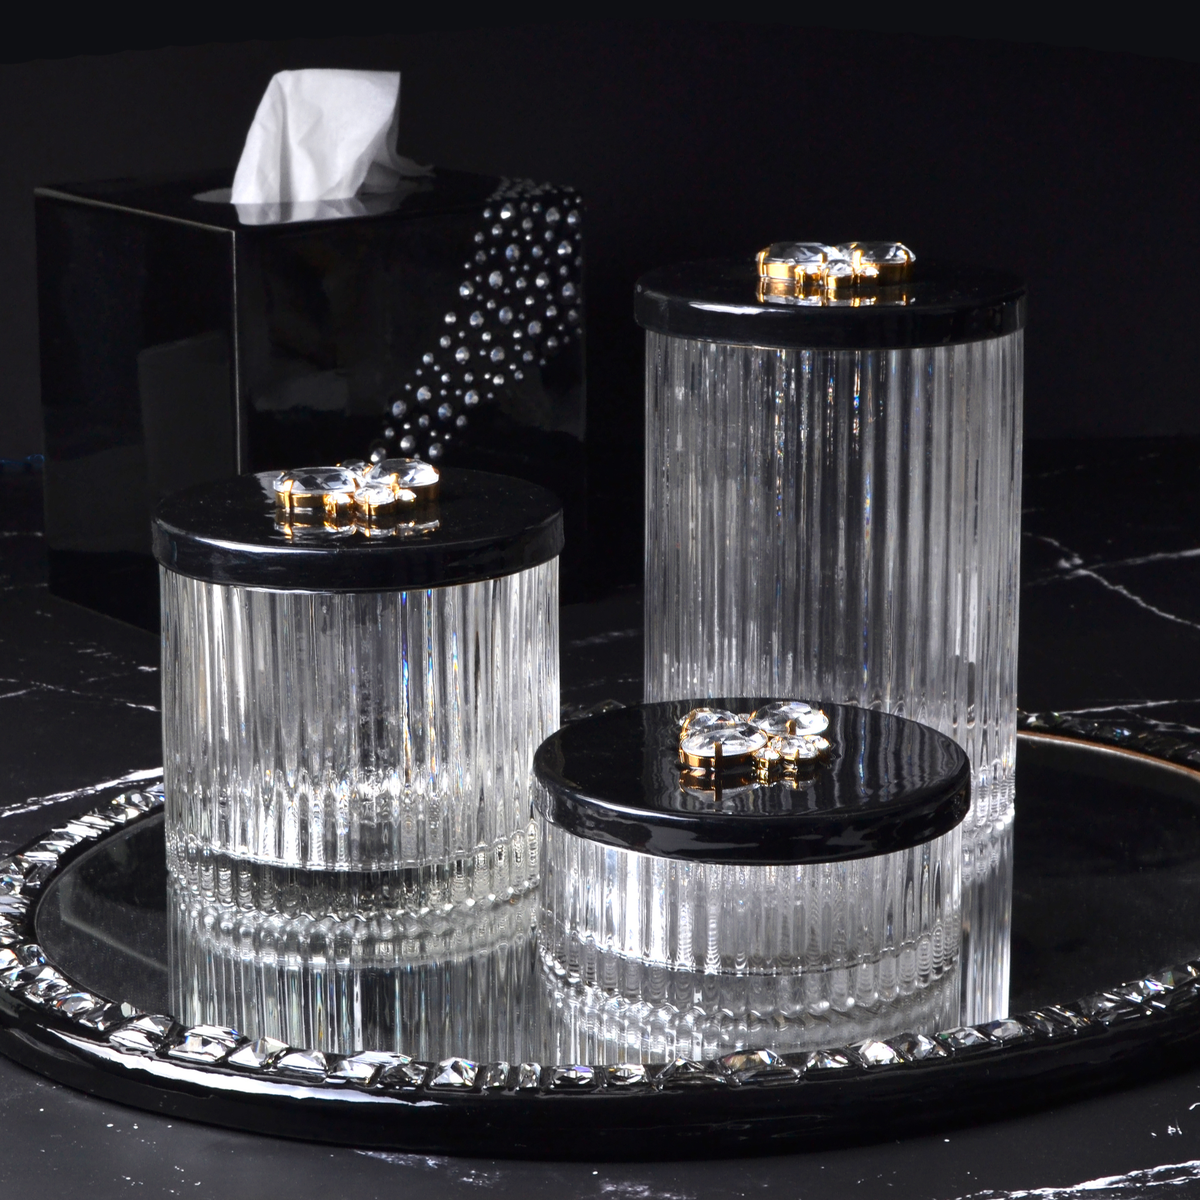 Mike and Ally Vanity Jars Black Enamel Set with Jewel Embellishment on Lid